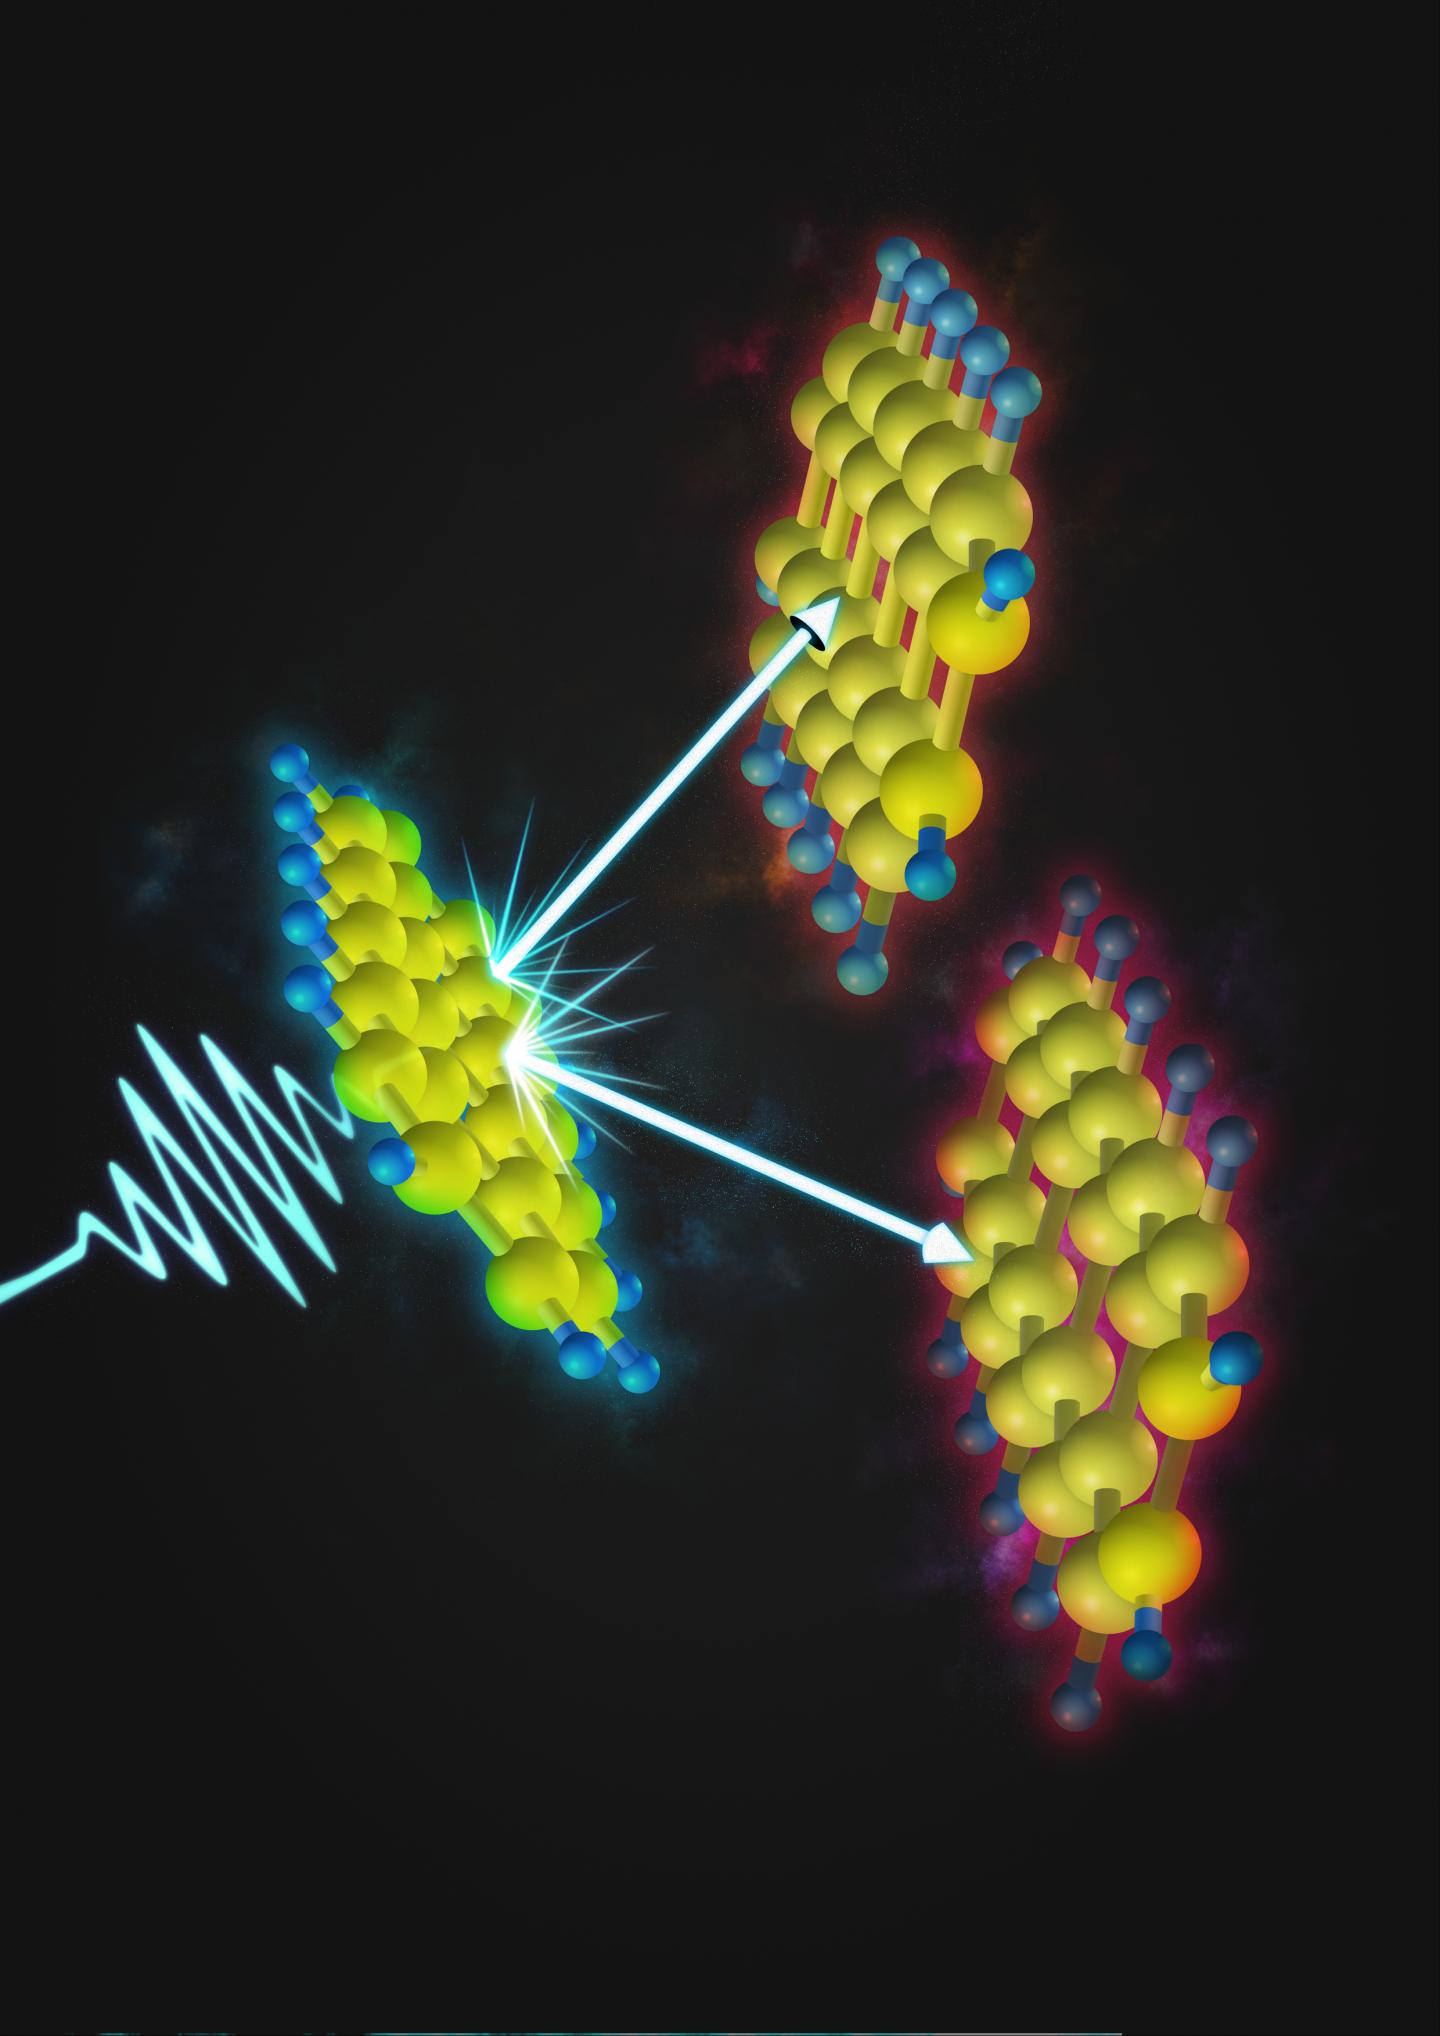 Pentacene Molecules Convert a Single Photon